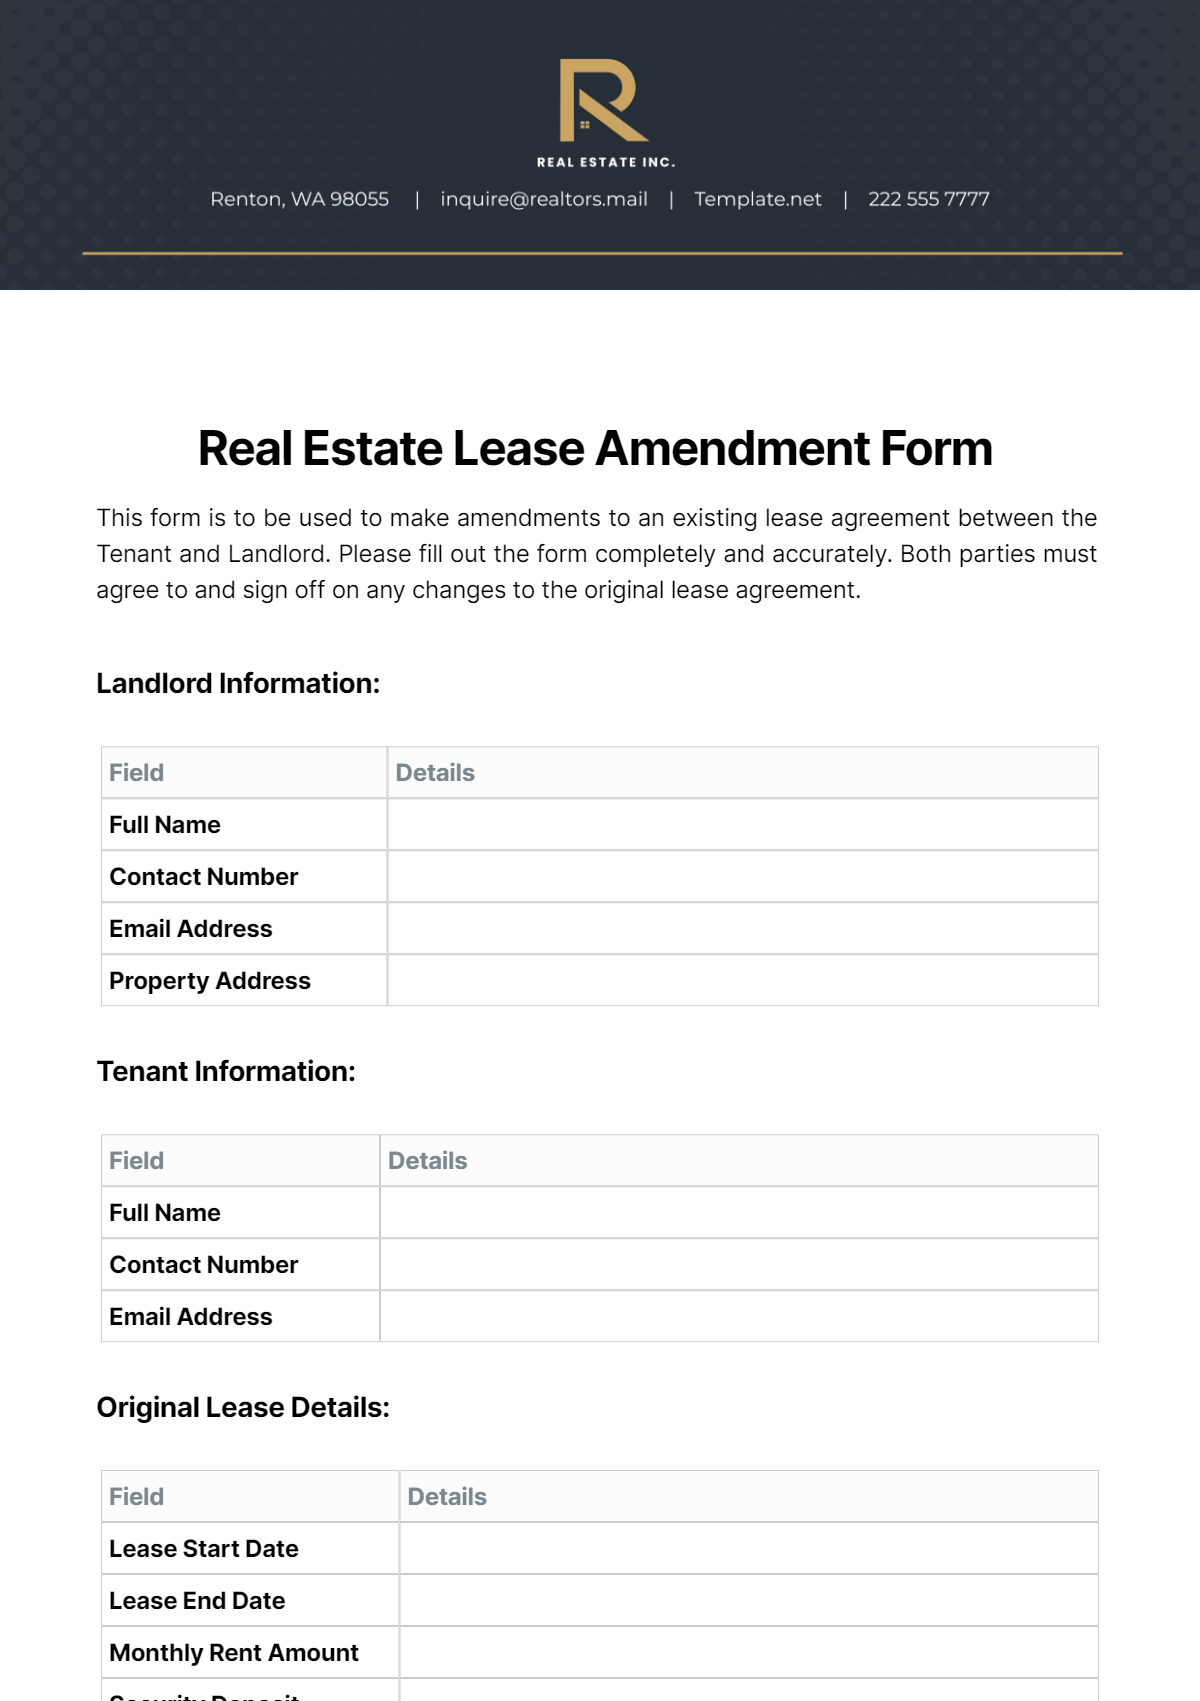 Real Estate Lease Amendment Form Template